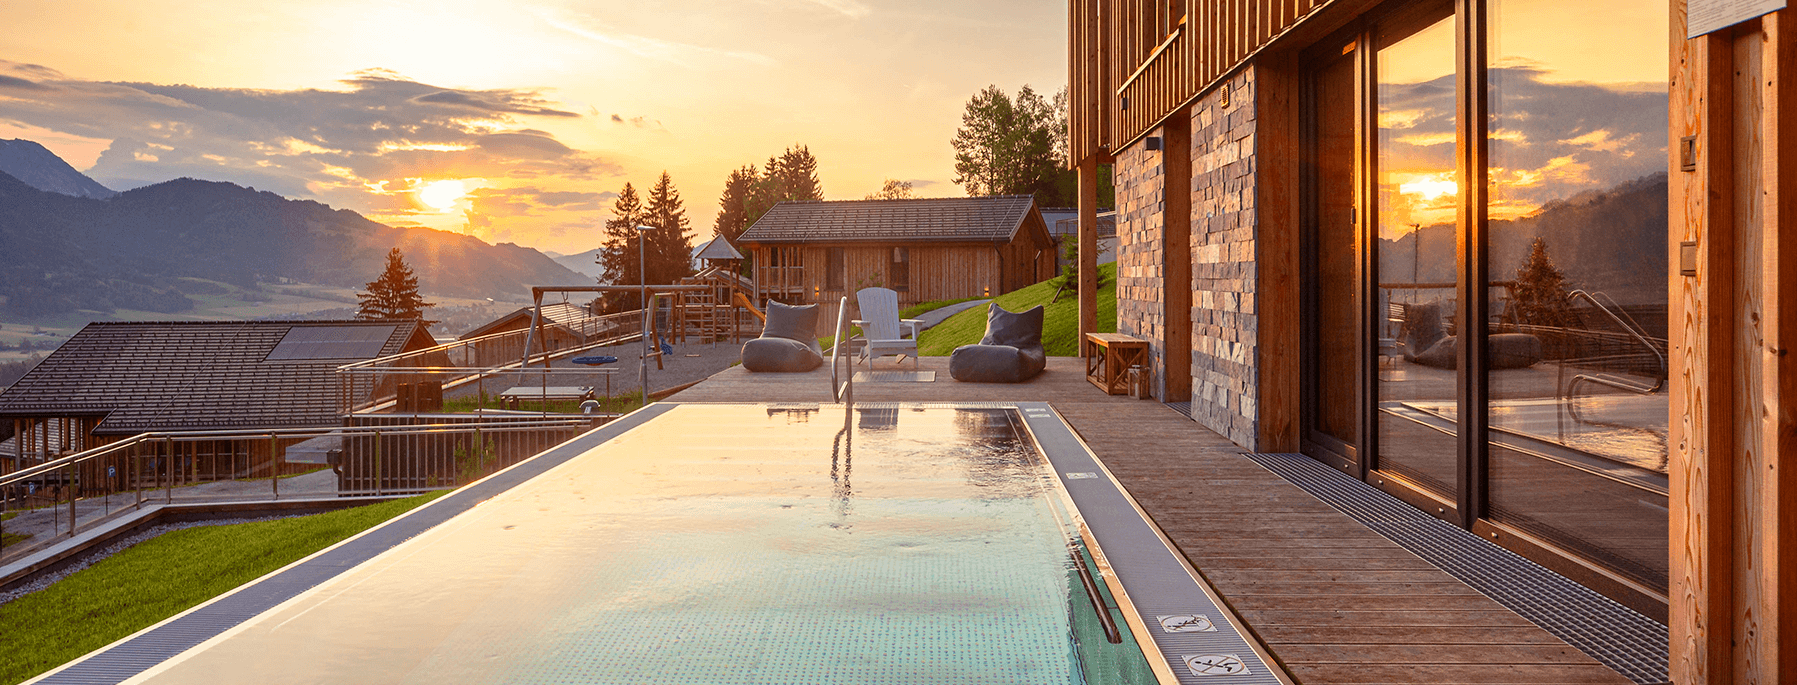 Ferienhaus mit Pool in Schladming   Bergresort Hauser Kaibling